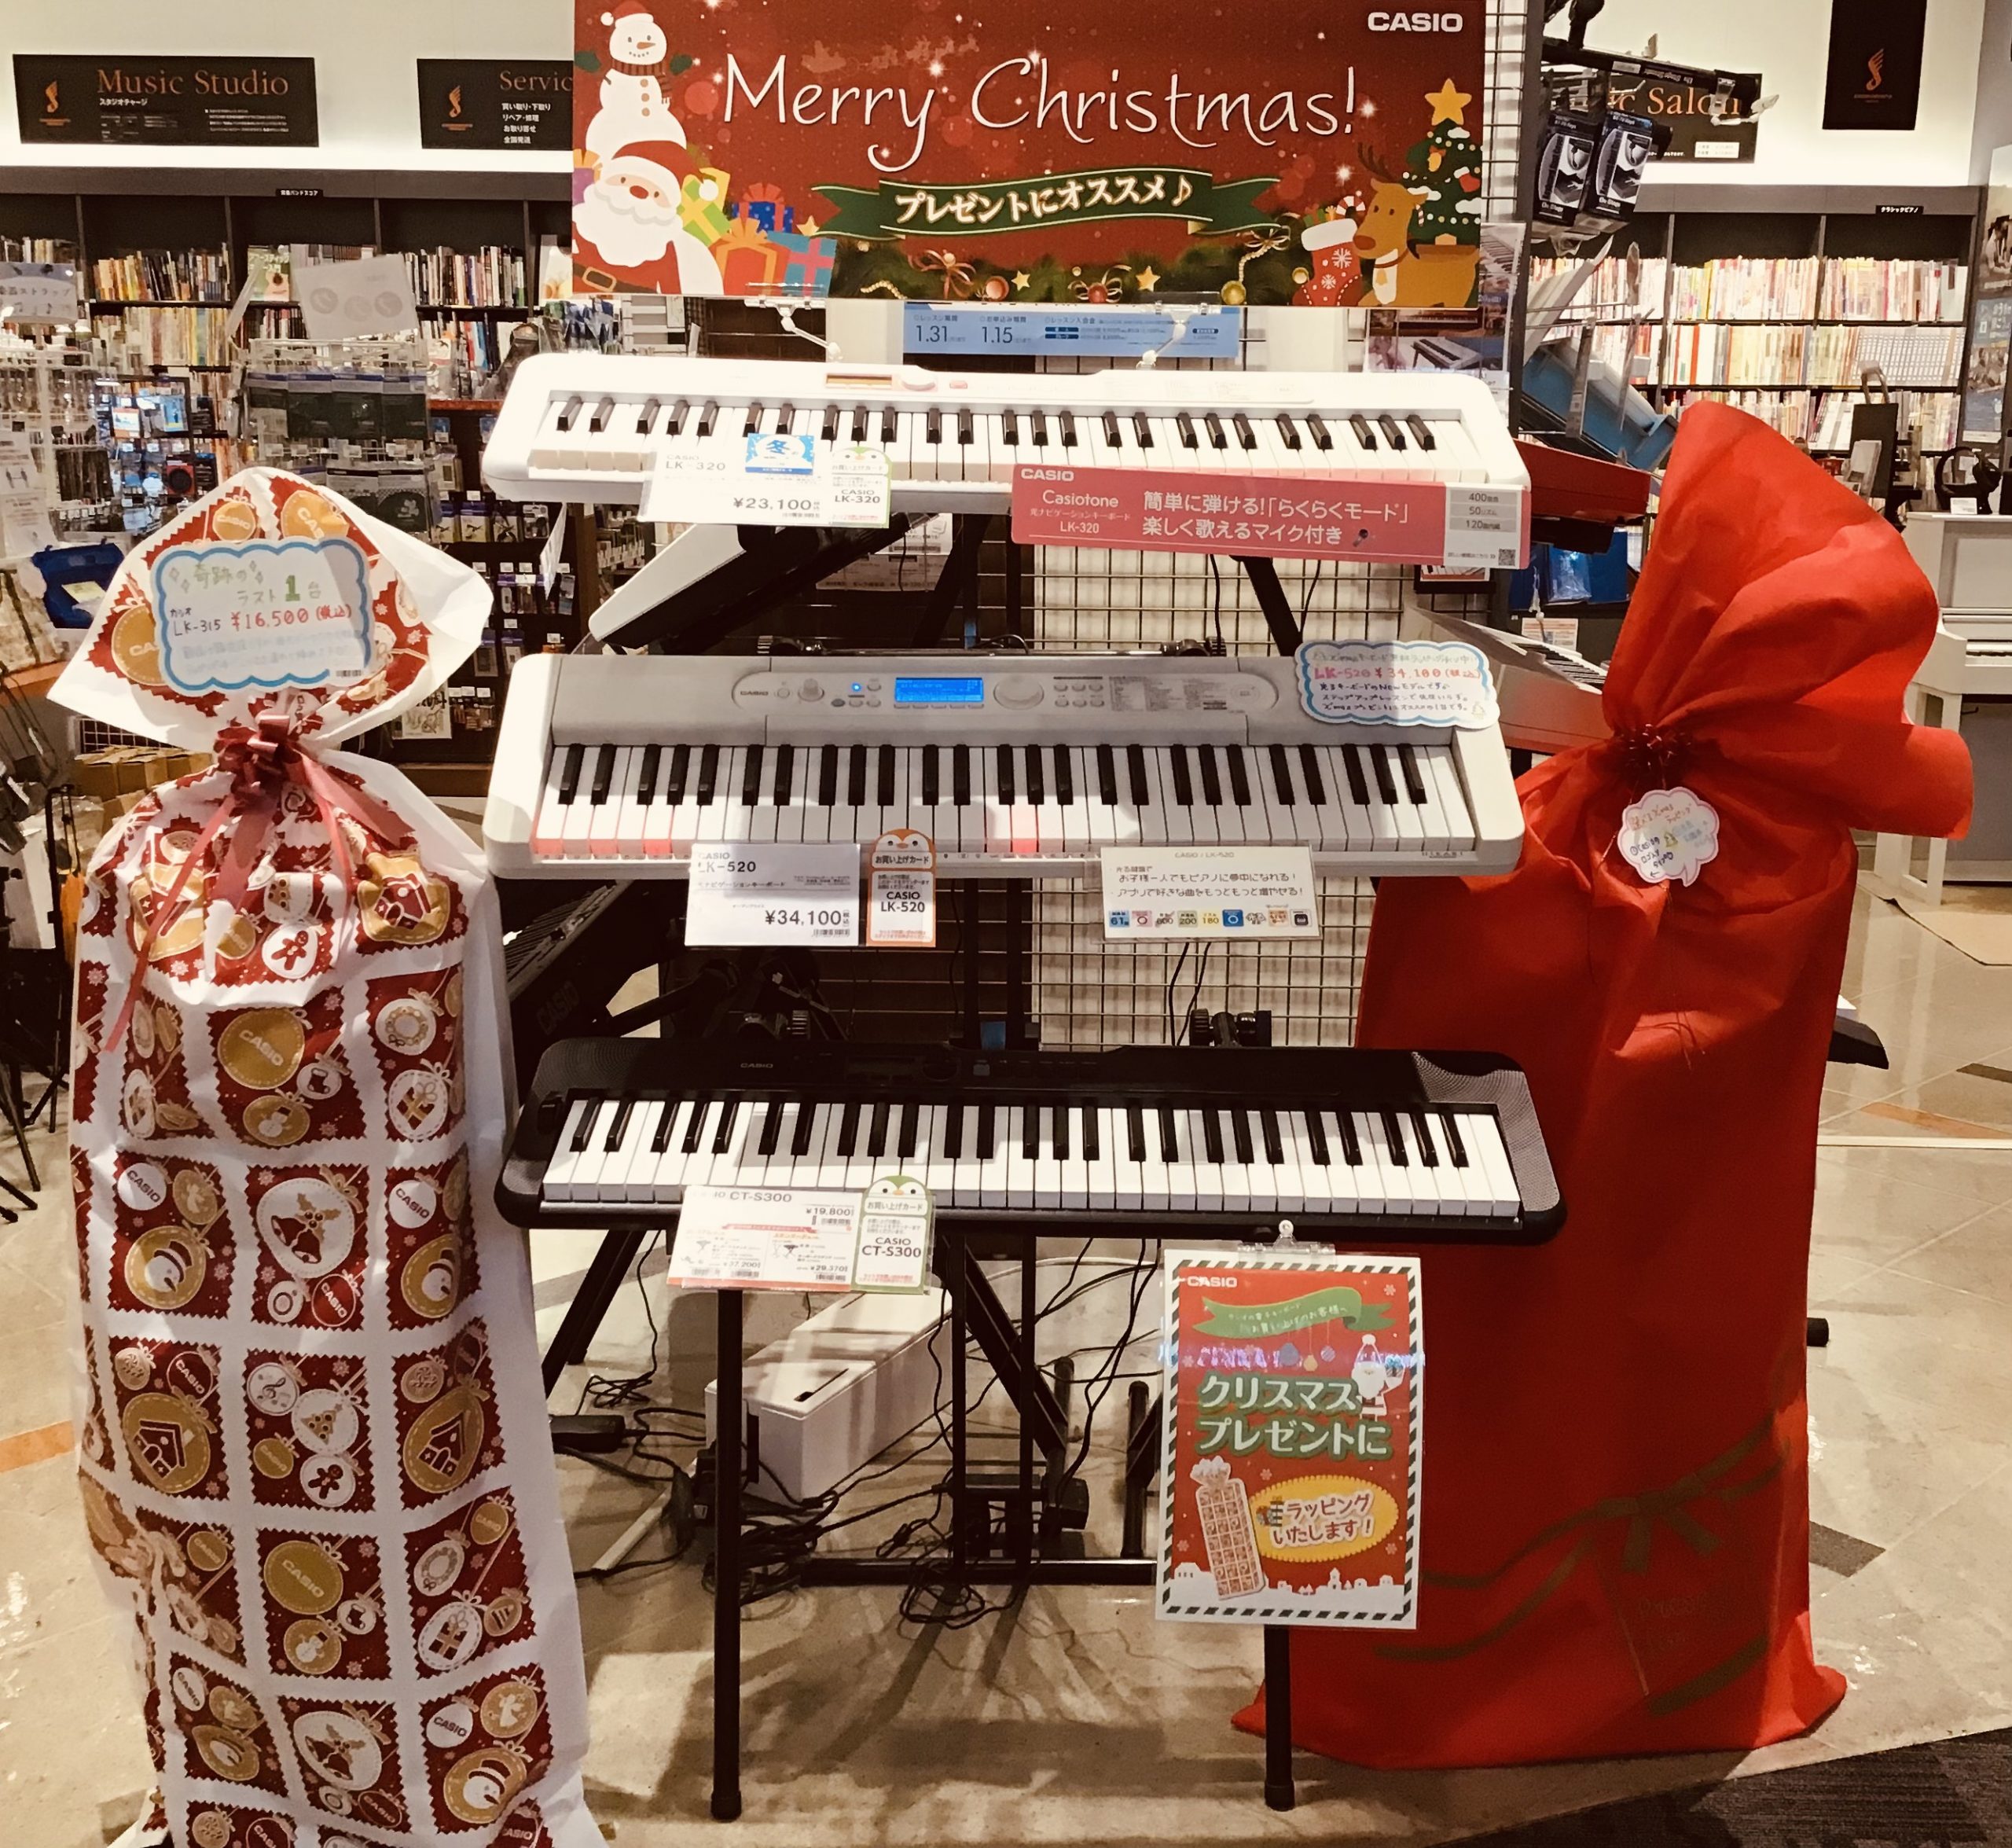 [https://www.shimamura.co.jp/shop/gifu/piano-keyboard/20190910/4011:title=] *クリスマスプレゼントにキーボードはいかがですか？ こんにちは！ 島村楽器岐阜店キーボード担当の高橋です。 冬といえば、こたつにミカン。そしてクリス […]